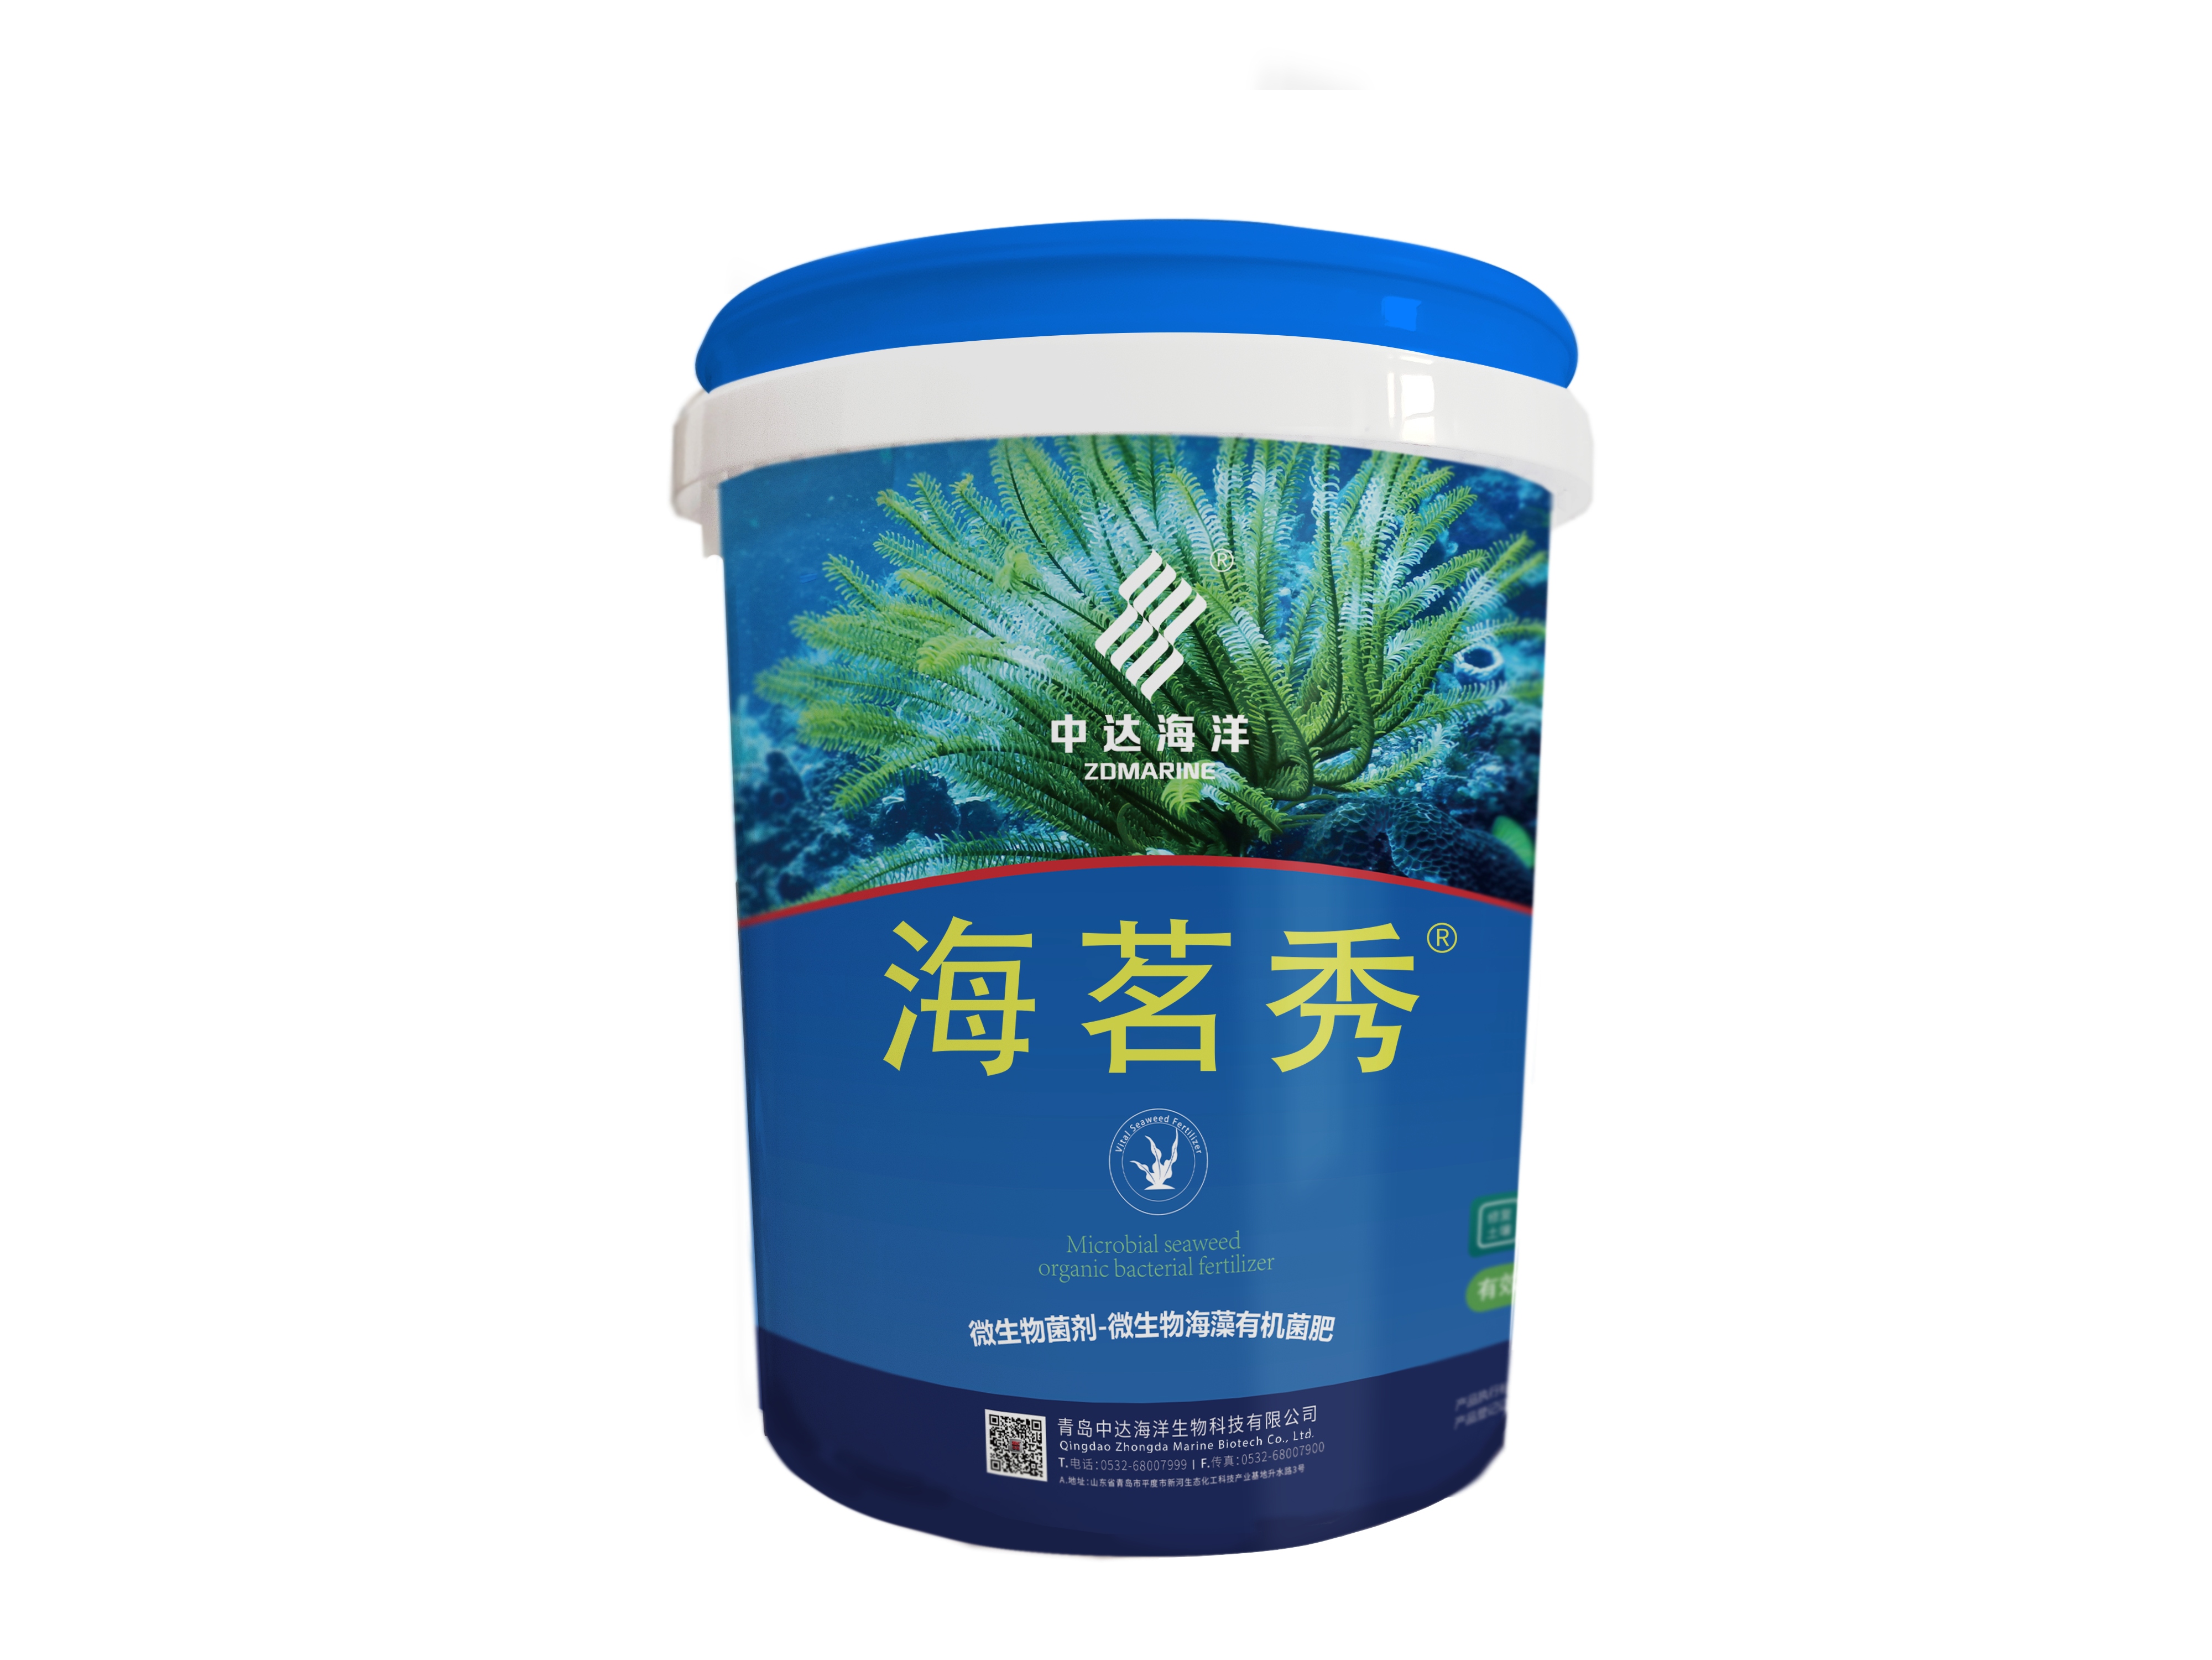 Haimingxiu—Microbial seaweed organic bacterial fertilizer